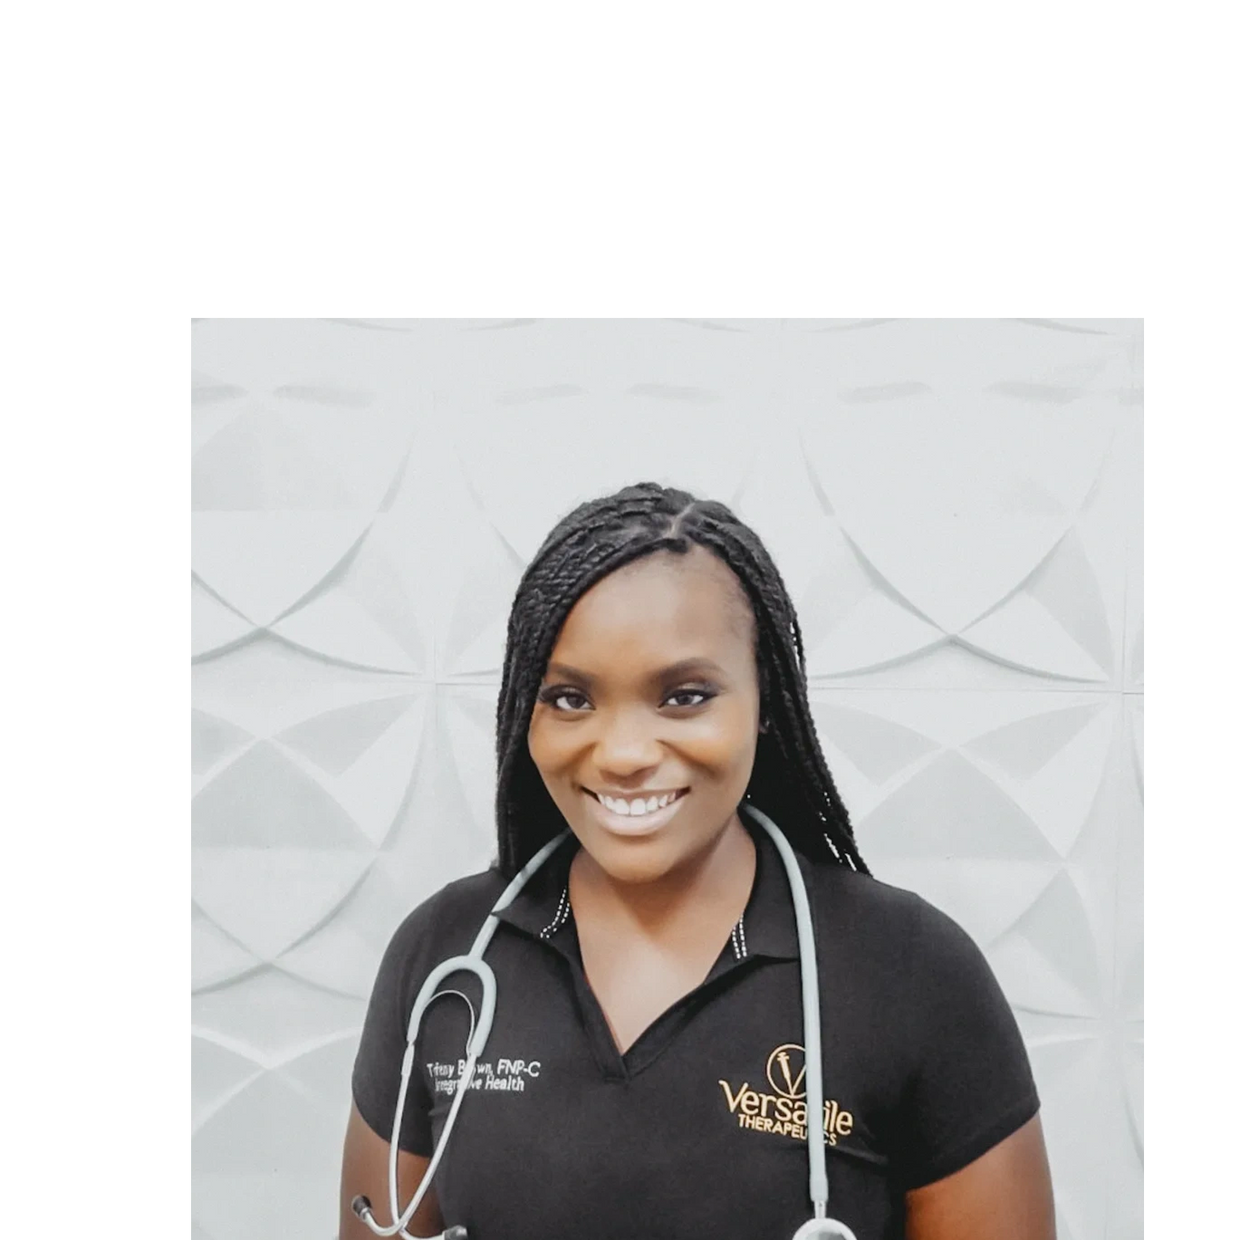 Nurse Practitioner smiling with stethoscope around neck